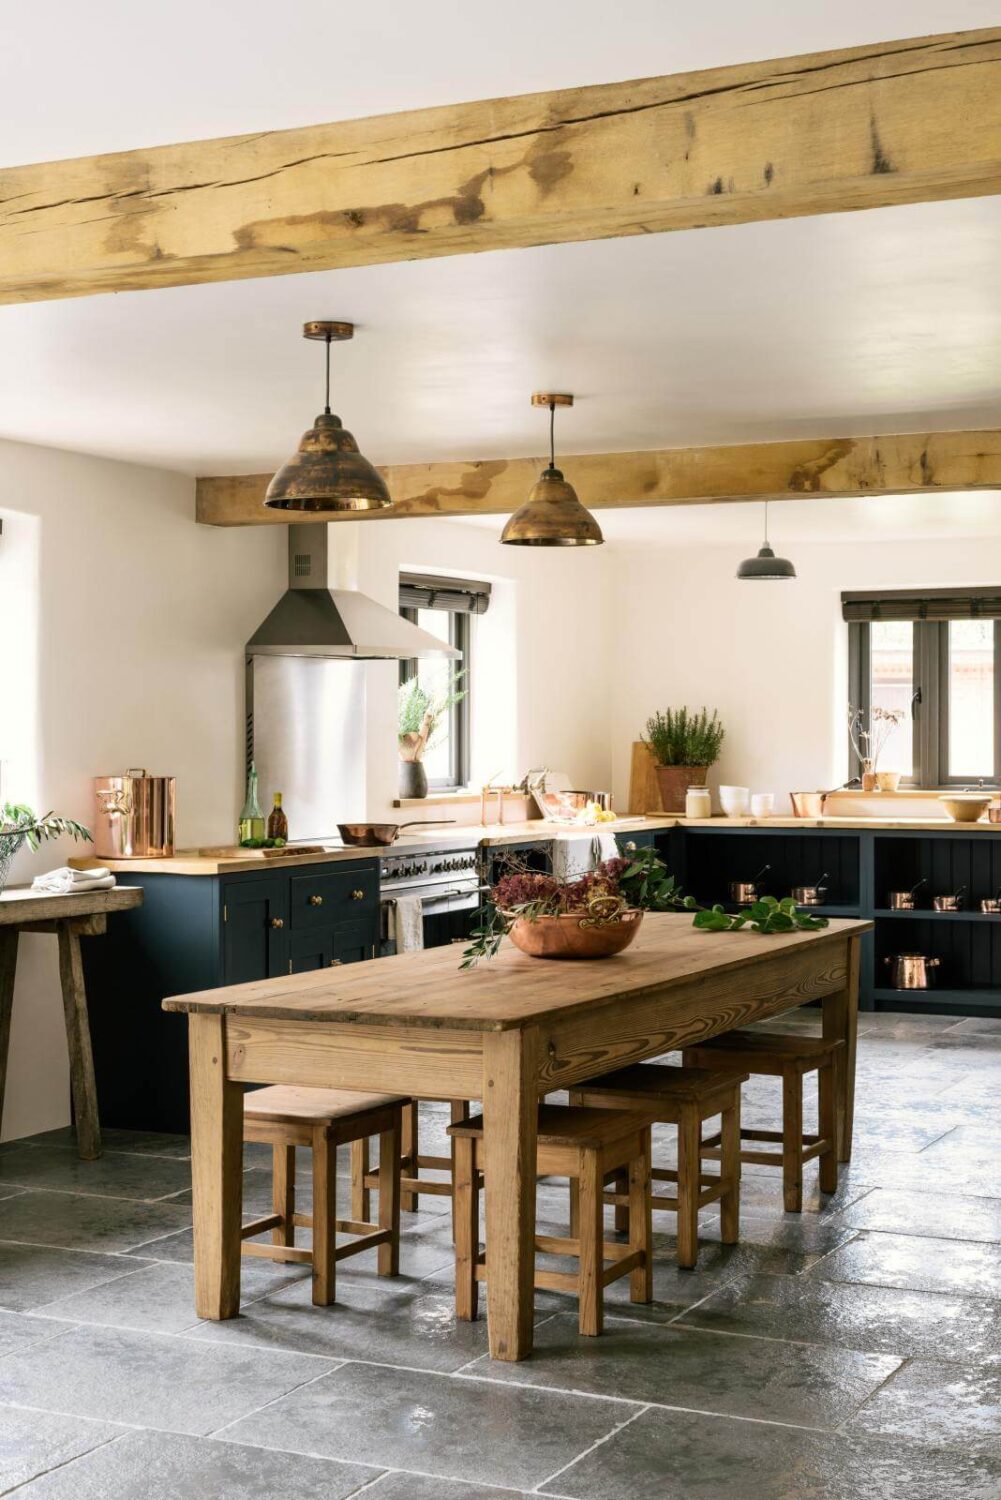 limestone-floor-kitchen-rustic-island-exposed-beams-nordroom